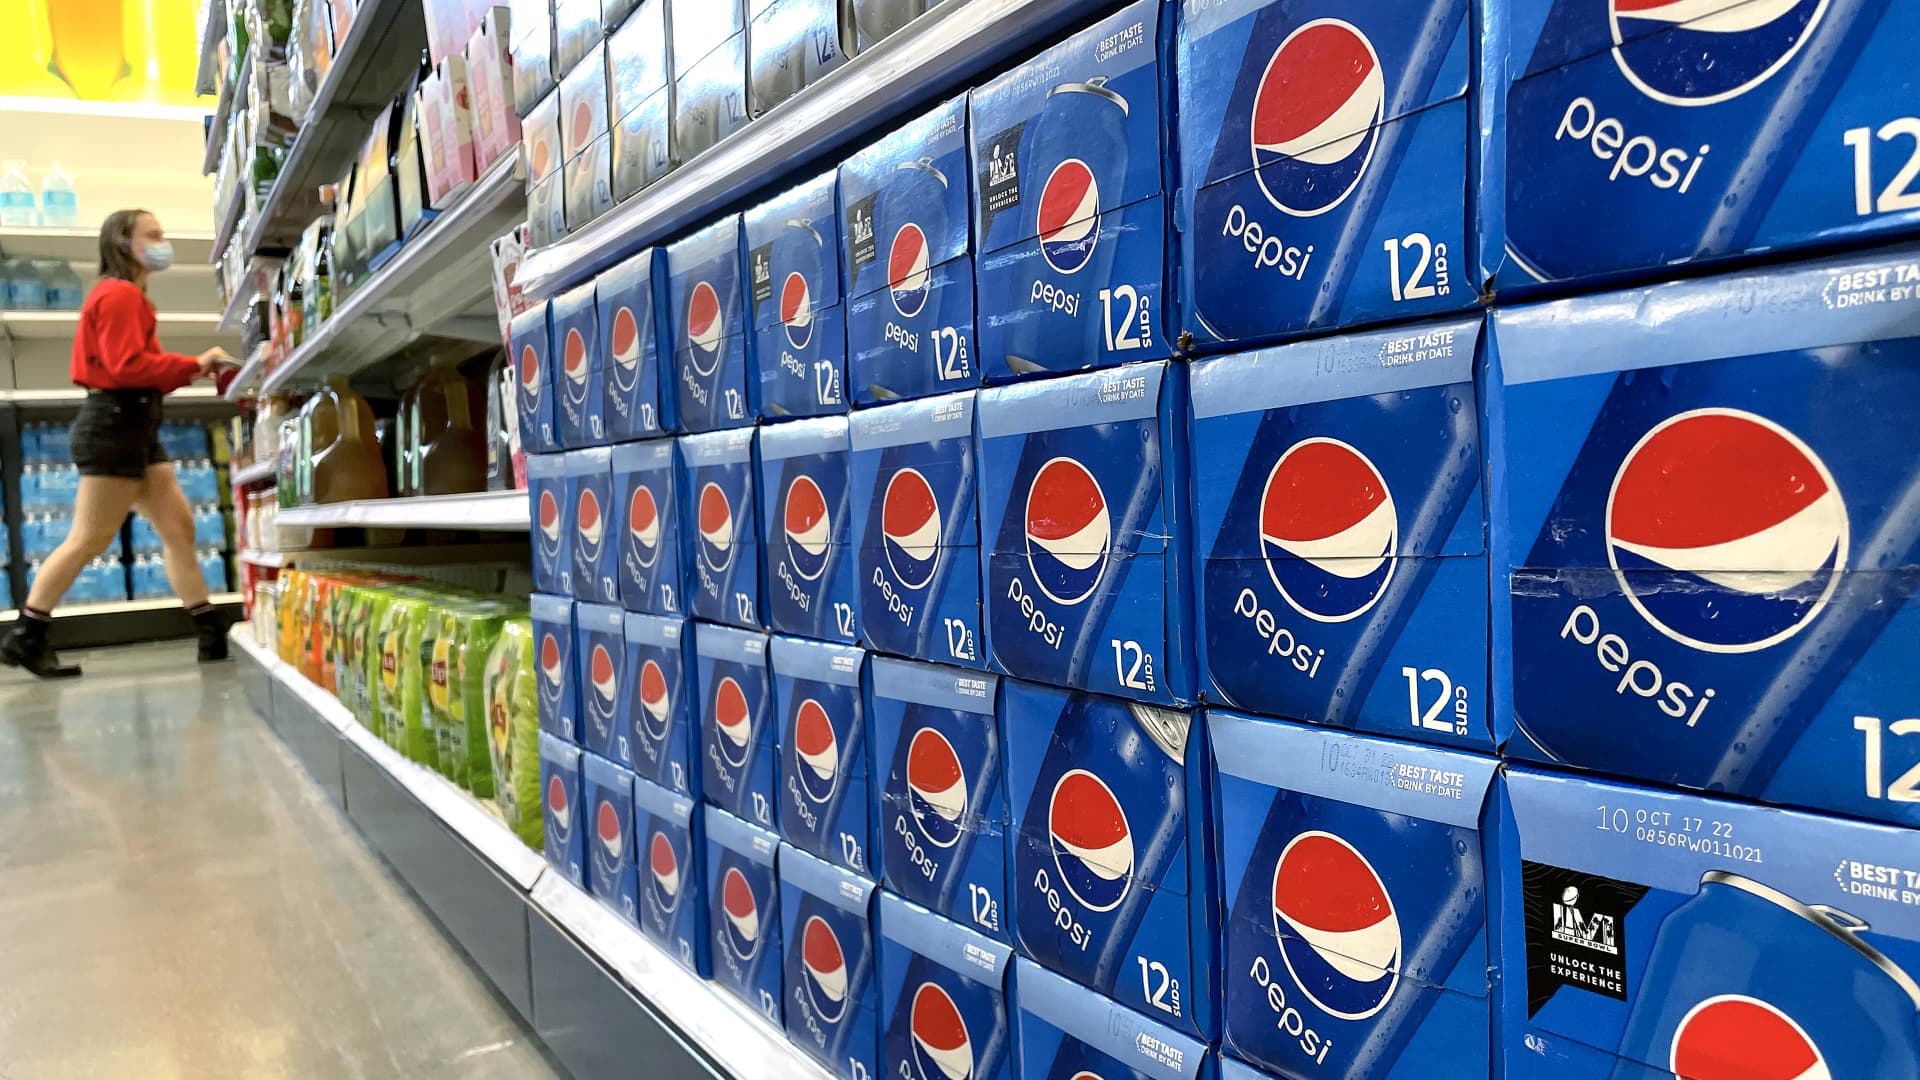 PepsiCo raises revenue outlook as earnings beat estimates despite higher costs – CNBC